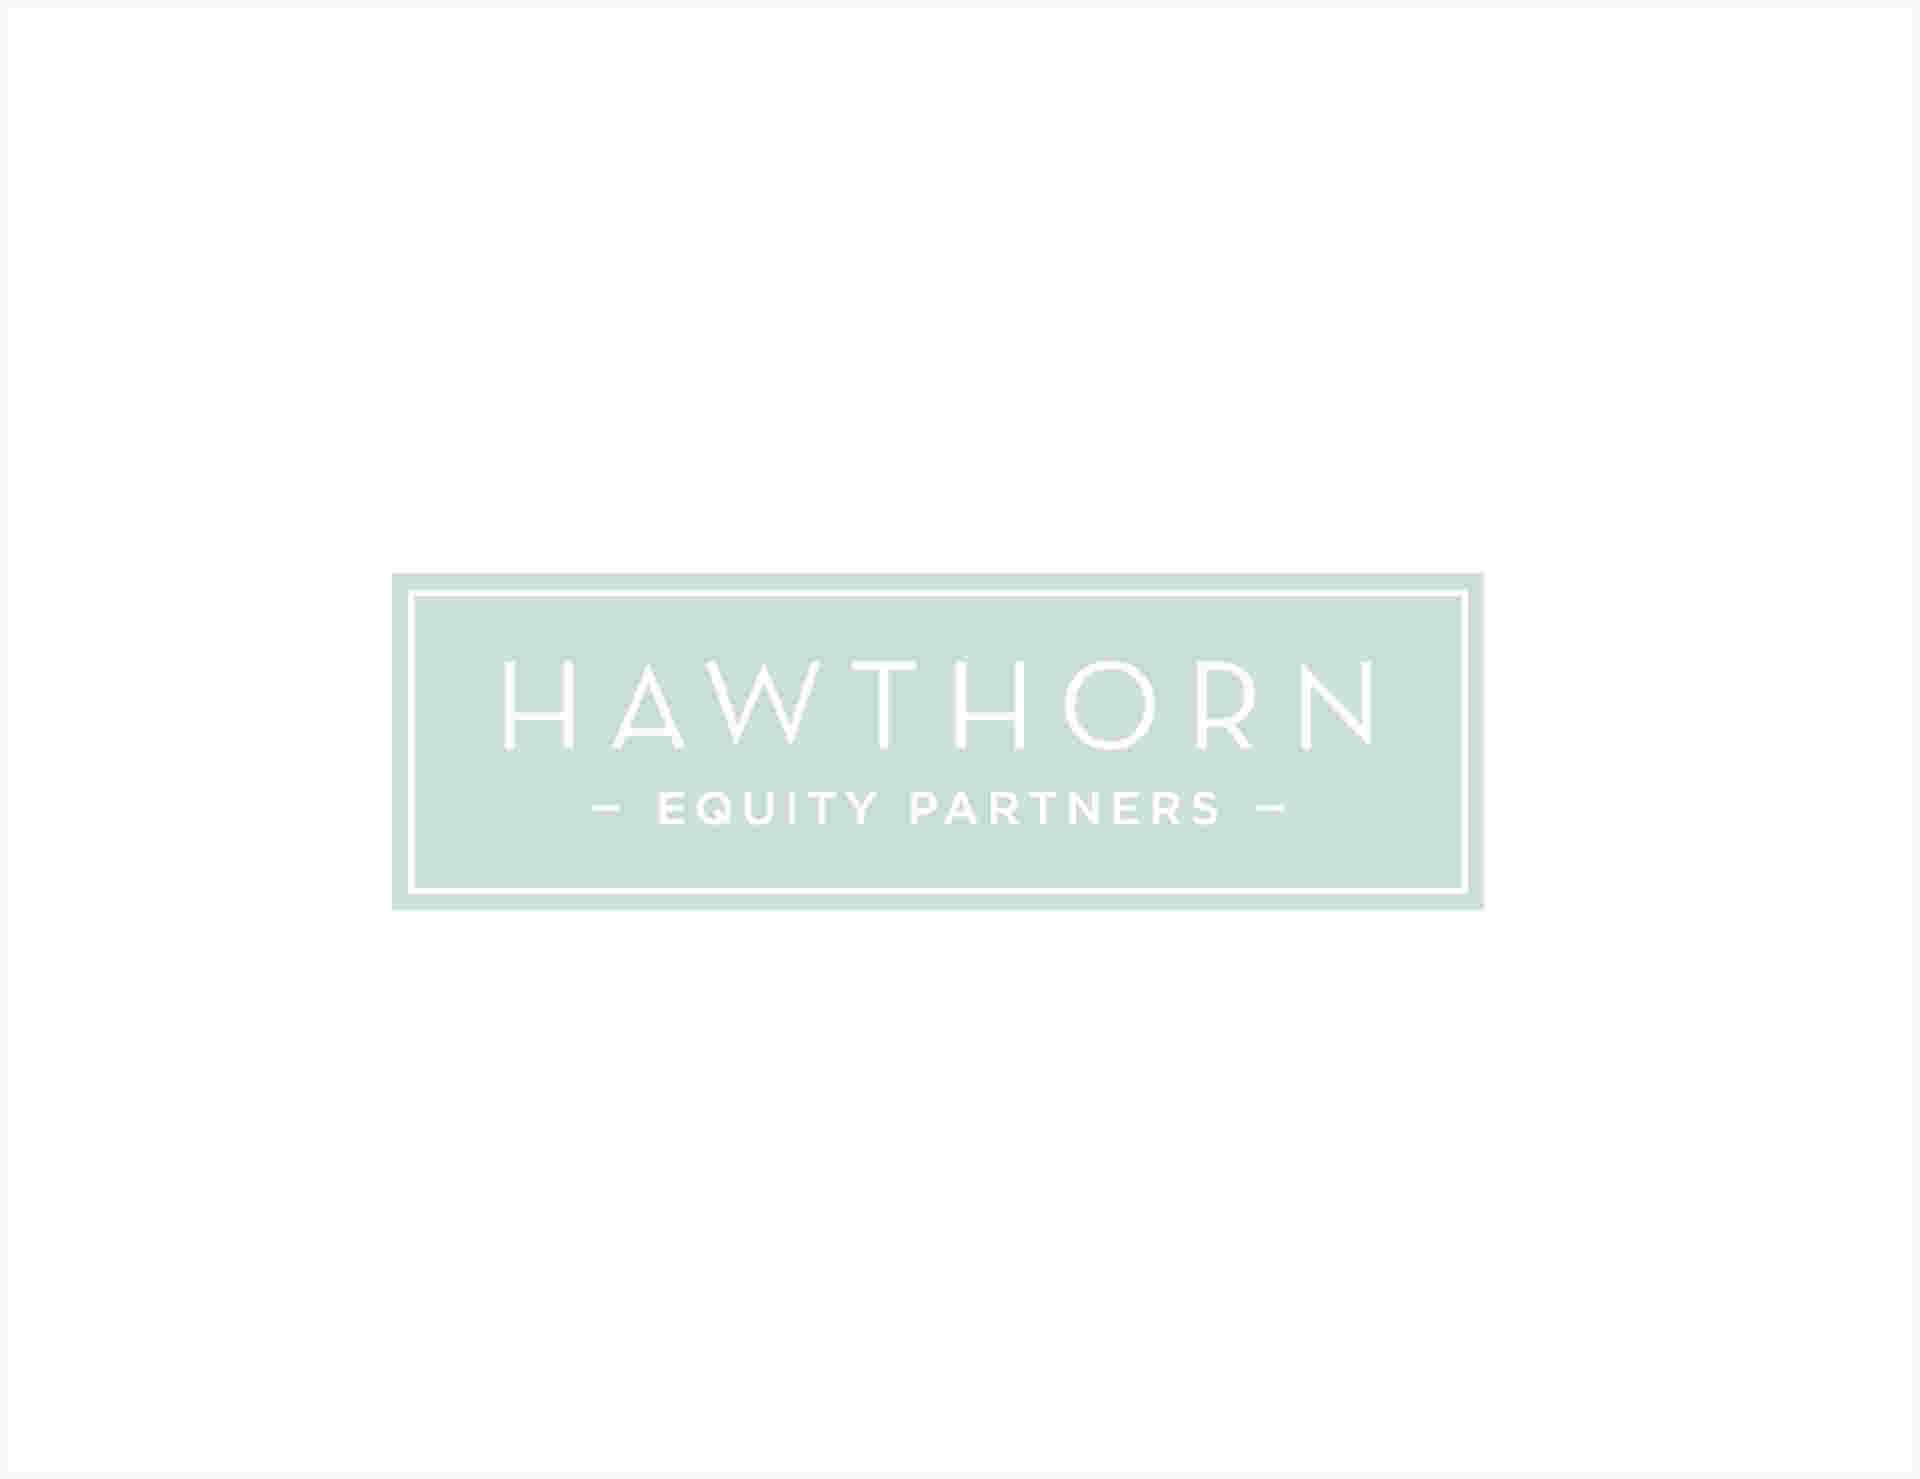 Hawthorn Equity Partners - Hawthorne-2_1